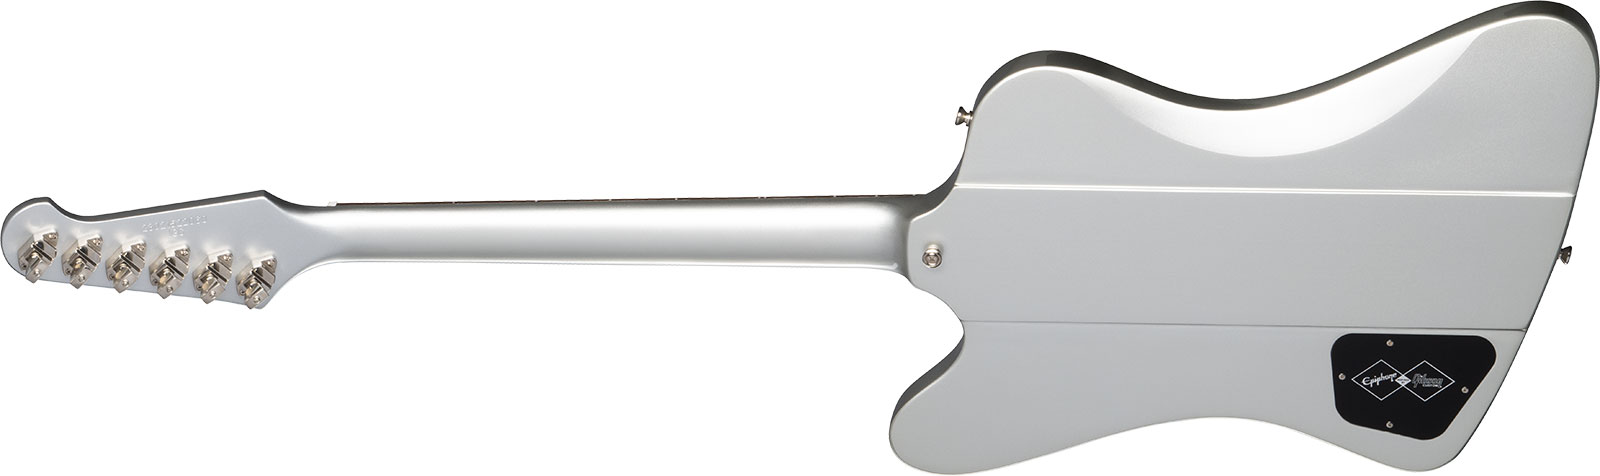 Epiphone Firebird I 1963 Inspired By Gibson Custom 1mh Ht Lau - Silver Mist - Retro-rock elektrische gitaar - Variation 1